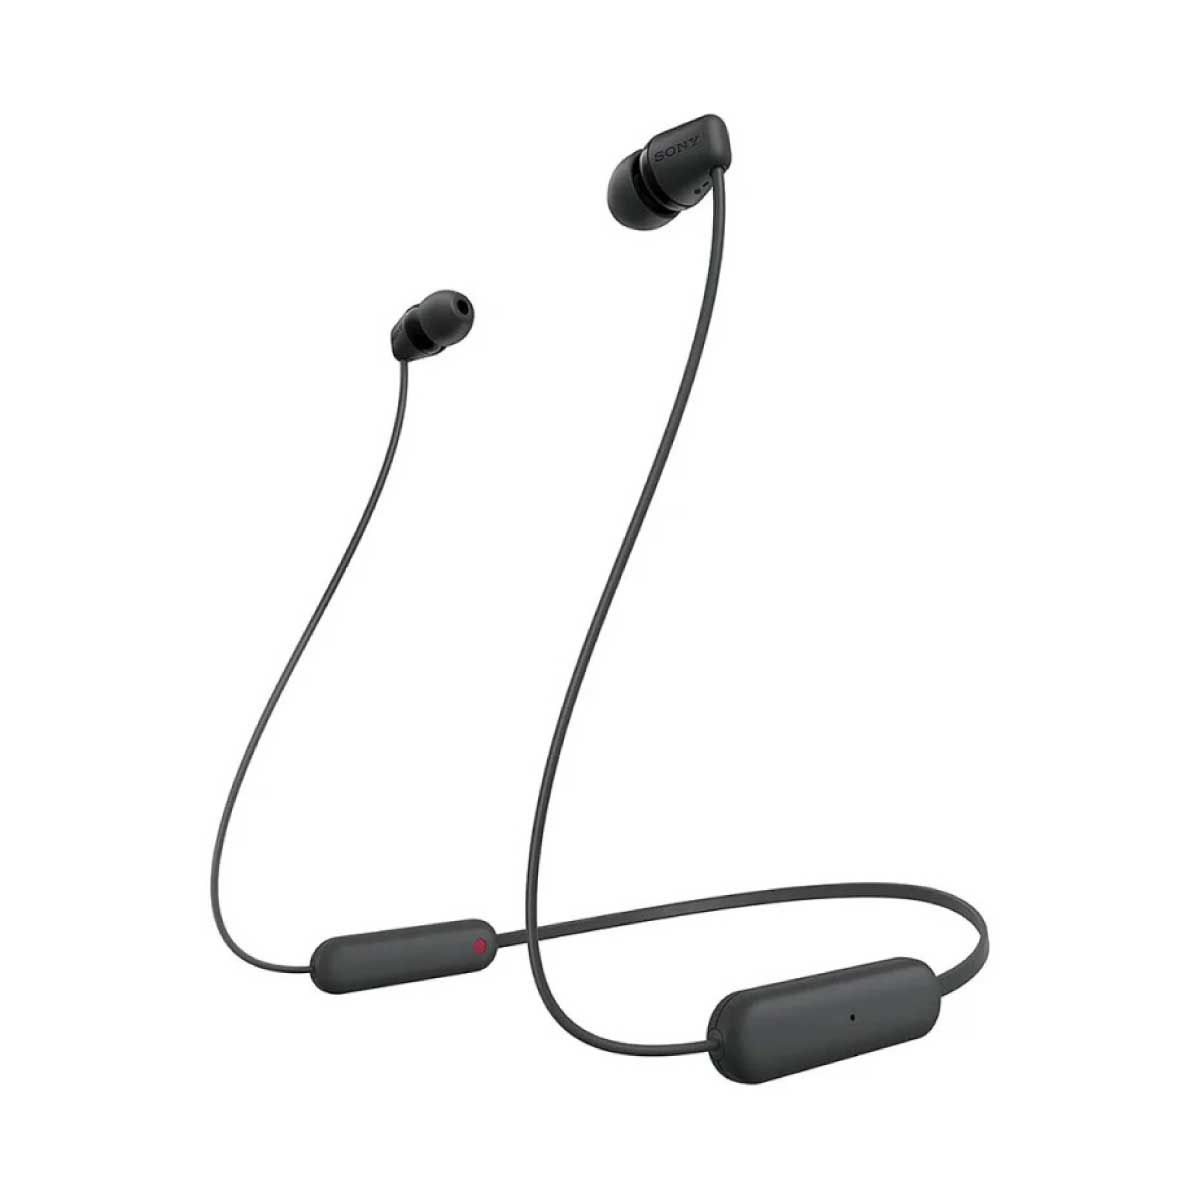 SONY  Wireless Headphone  in-ear รุ่น WI-C100 หูฟังแบบคล้องคอไร้สาย